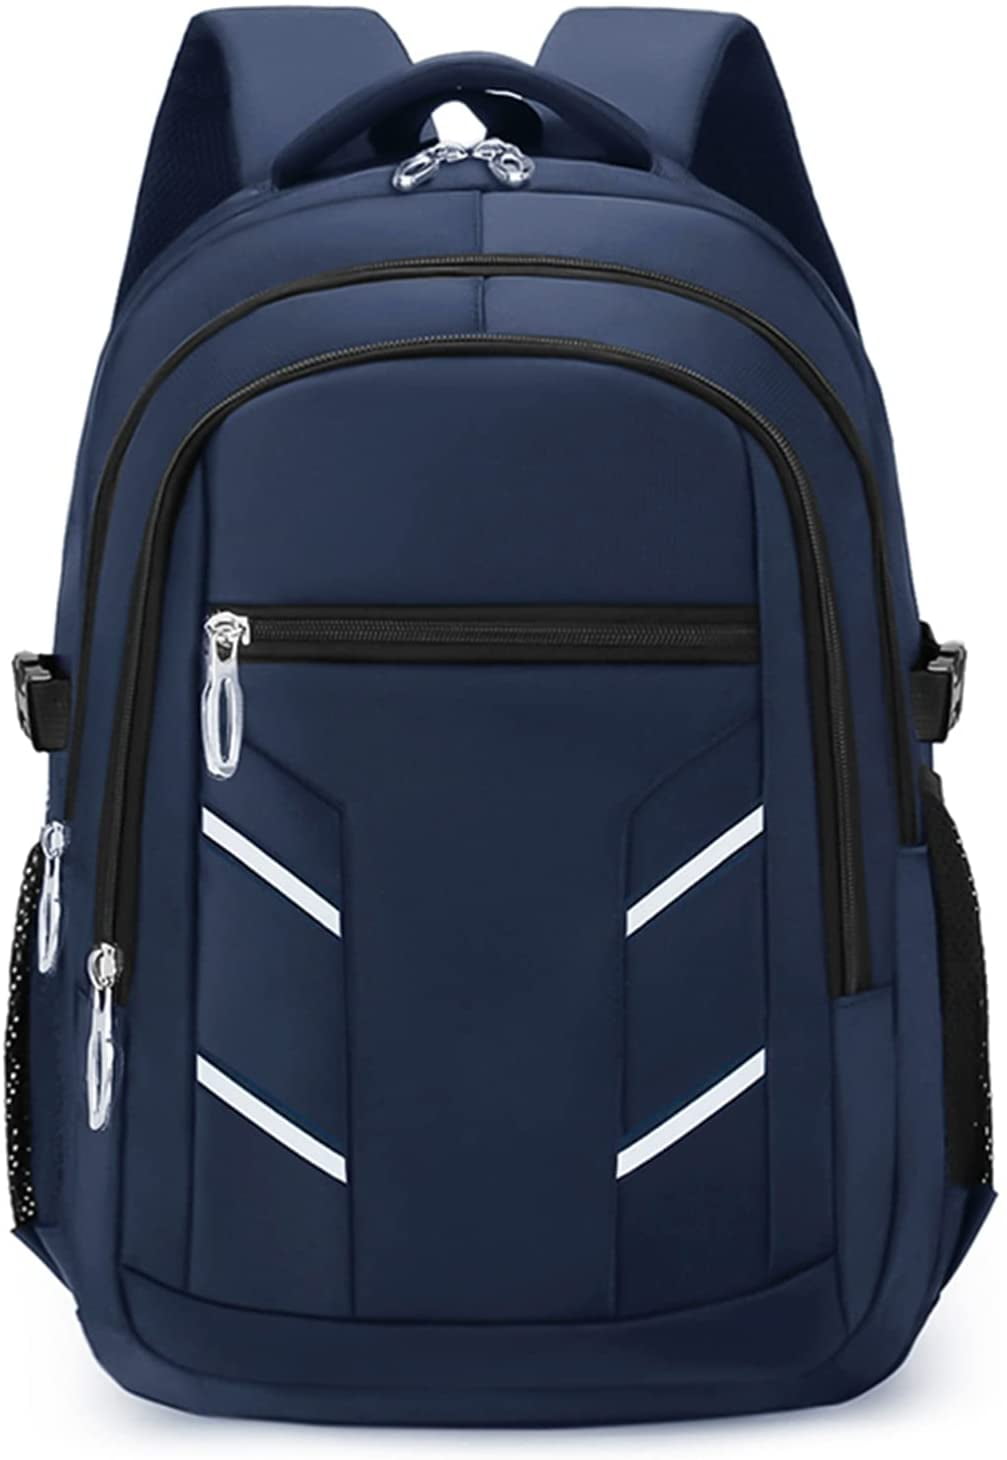 Asge Backpack for Men Durable Water Resistant College School Backpack ...